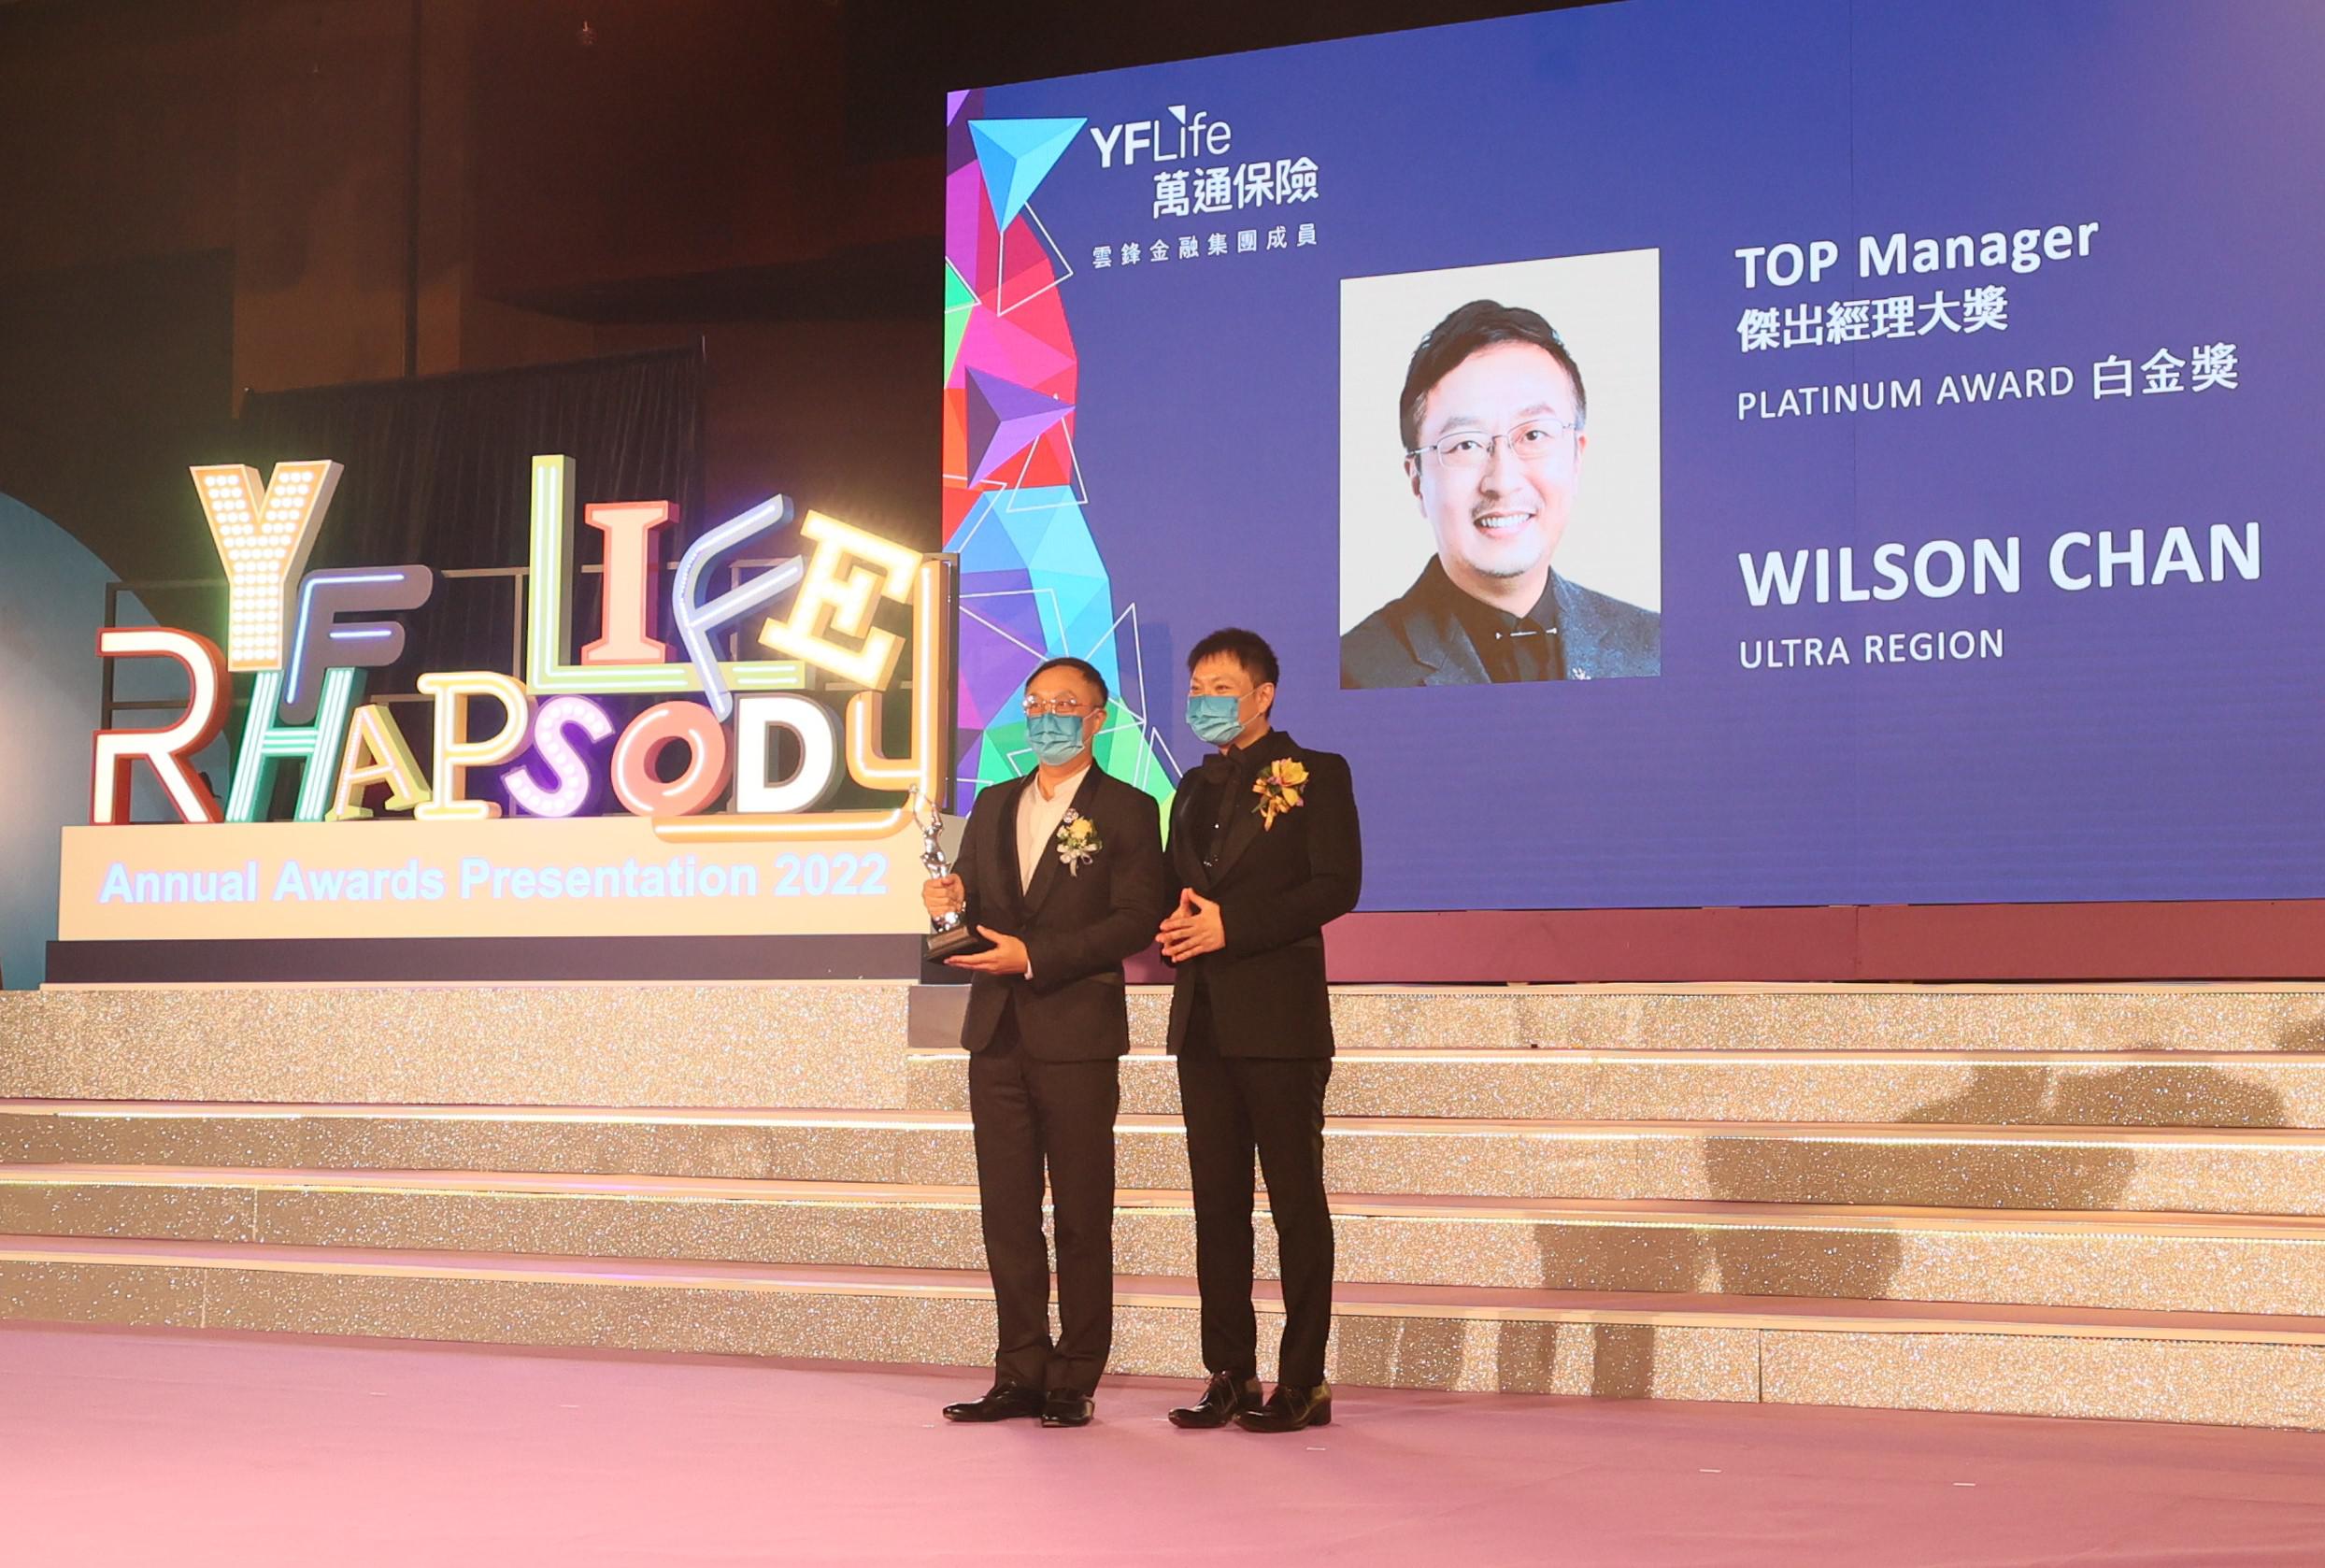 Mr. Wilson Chan, Platinum Award winner of Top Manager. 